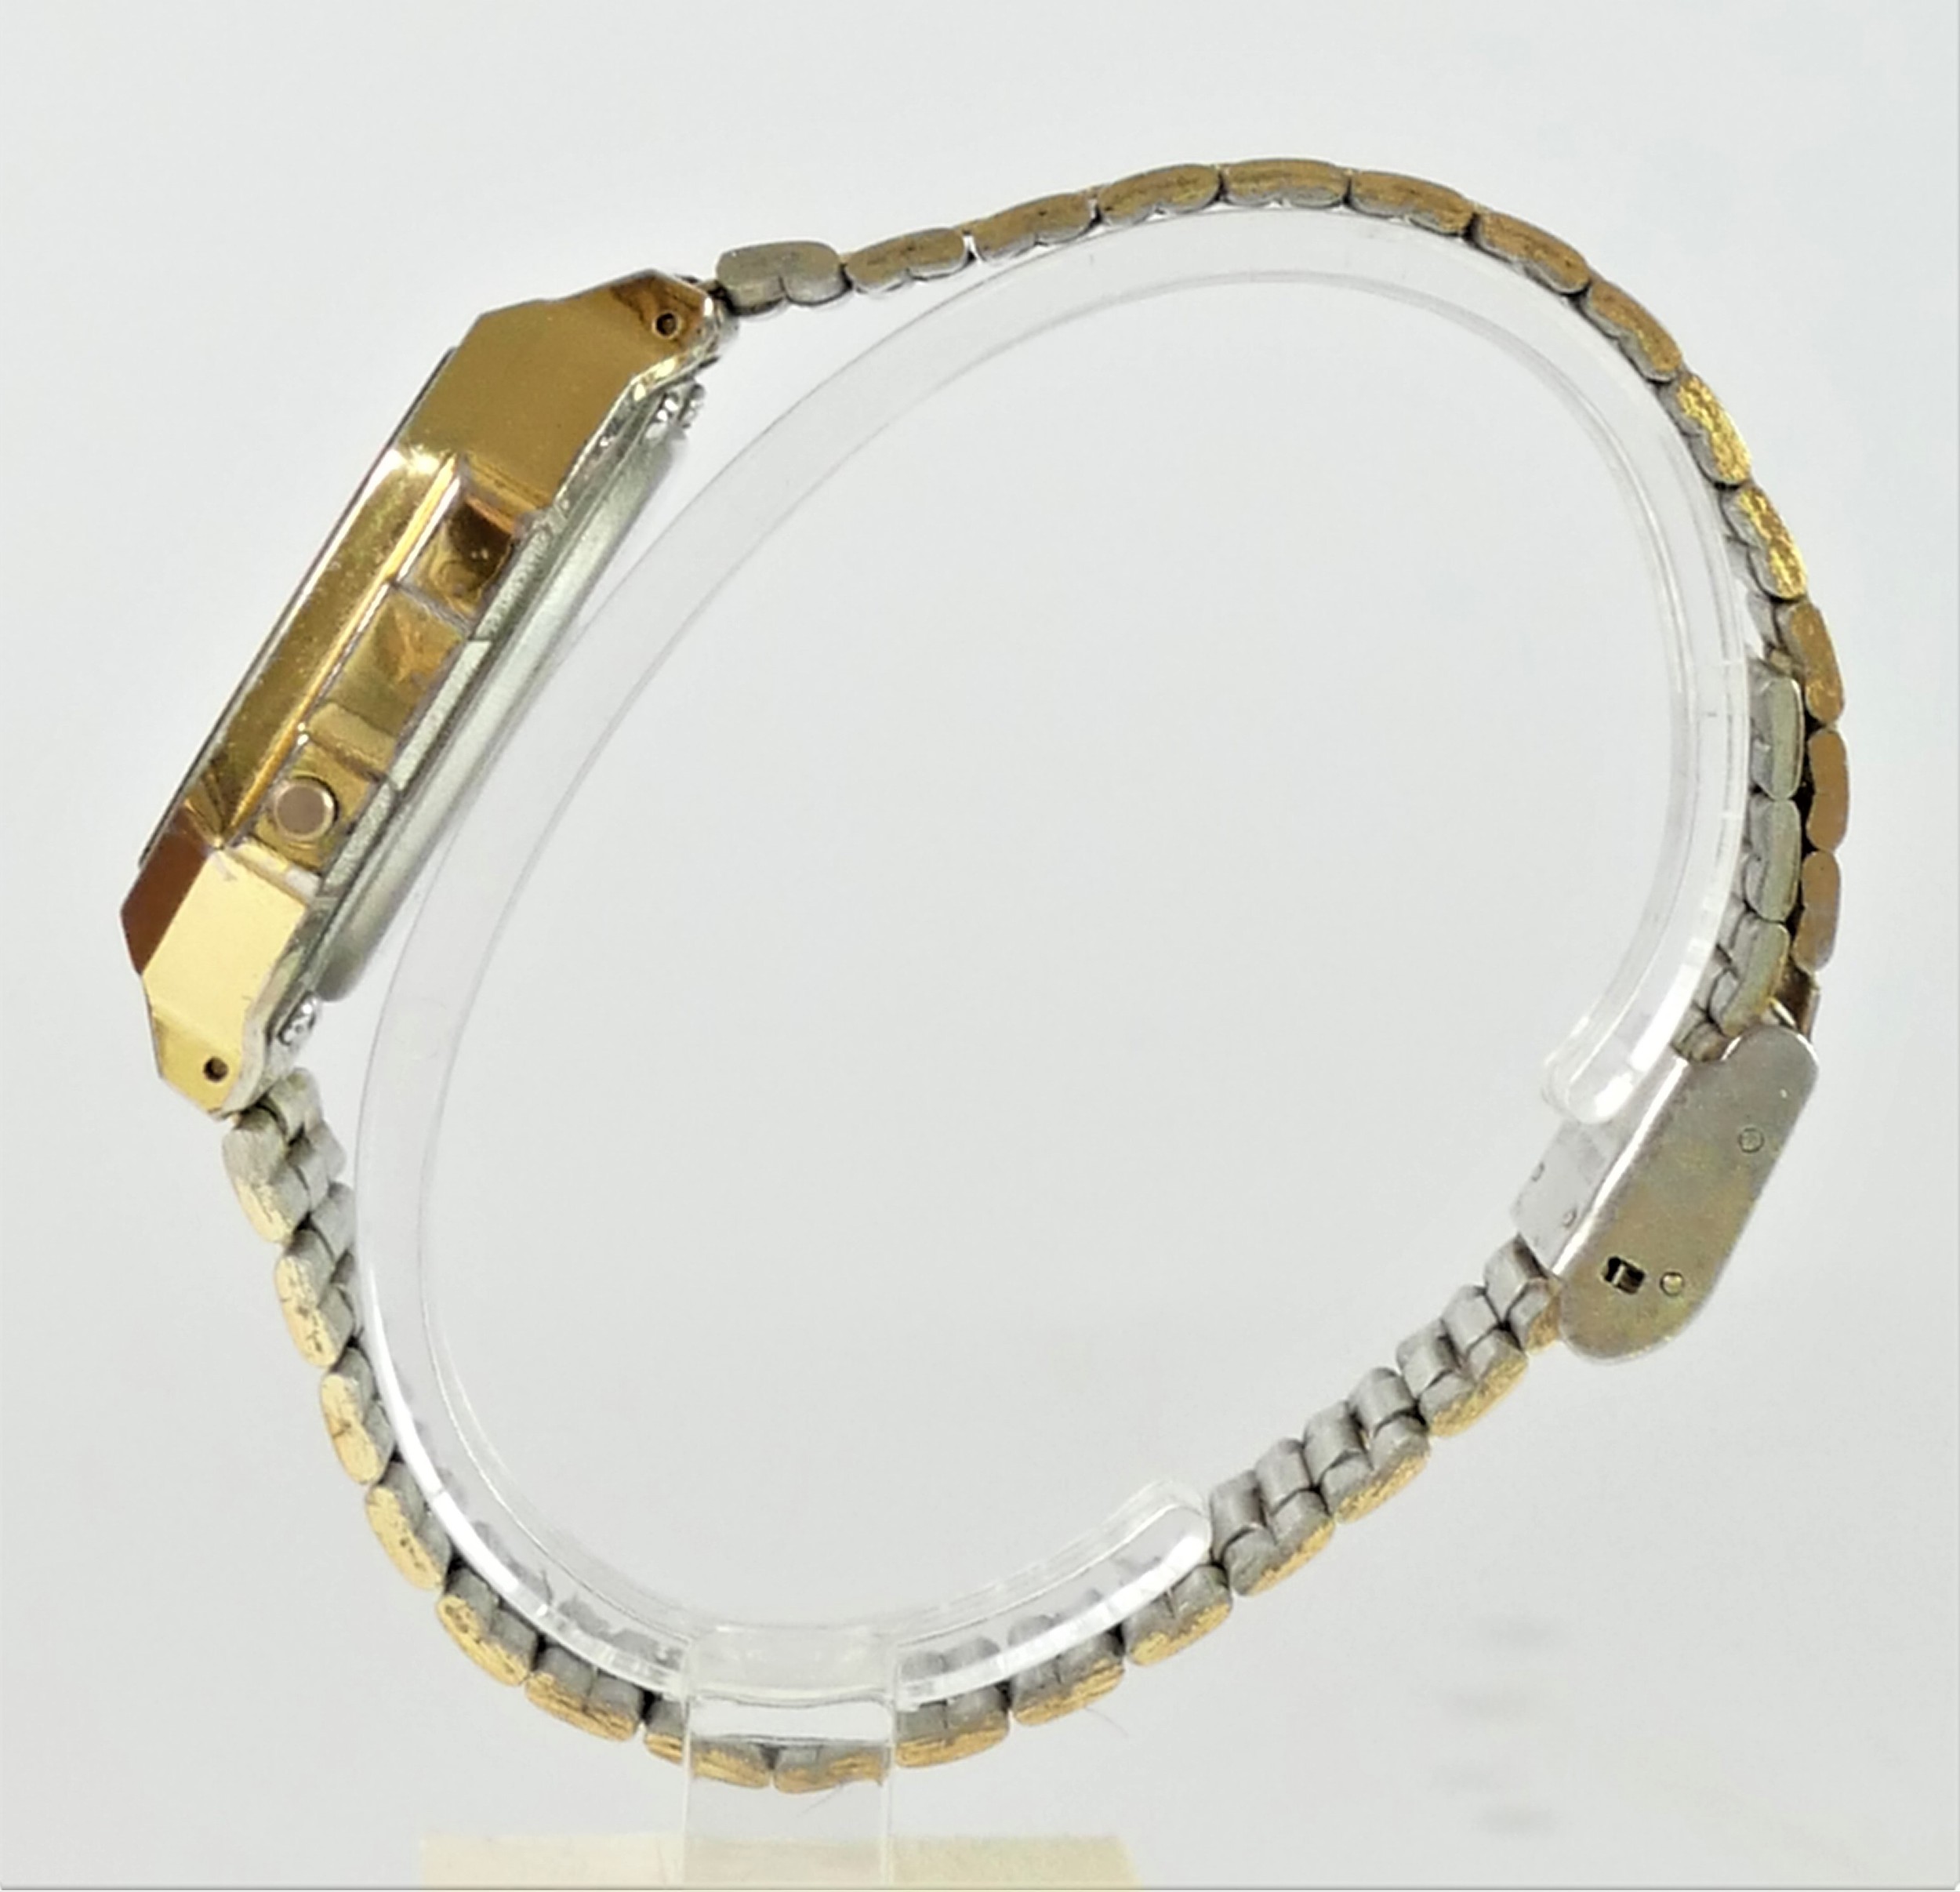 Casio Alarm Chrono, a gentleman's stainless steel digital wristwatch, ref 593, A158W, original - Image 6 of 7